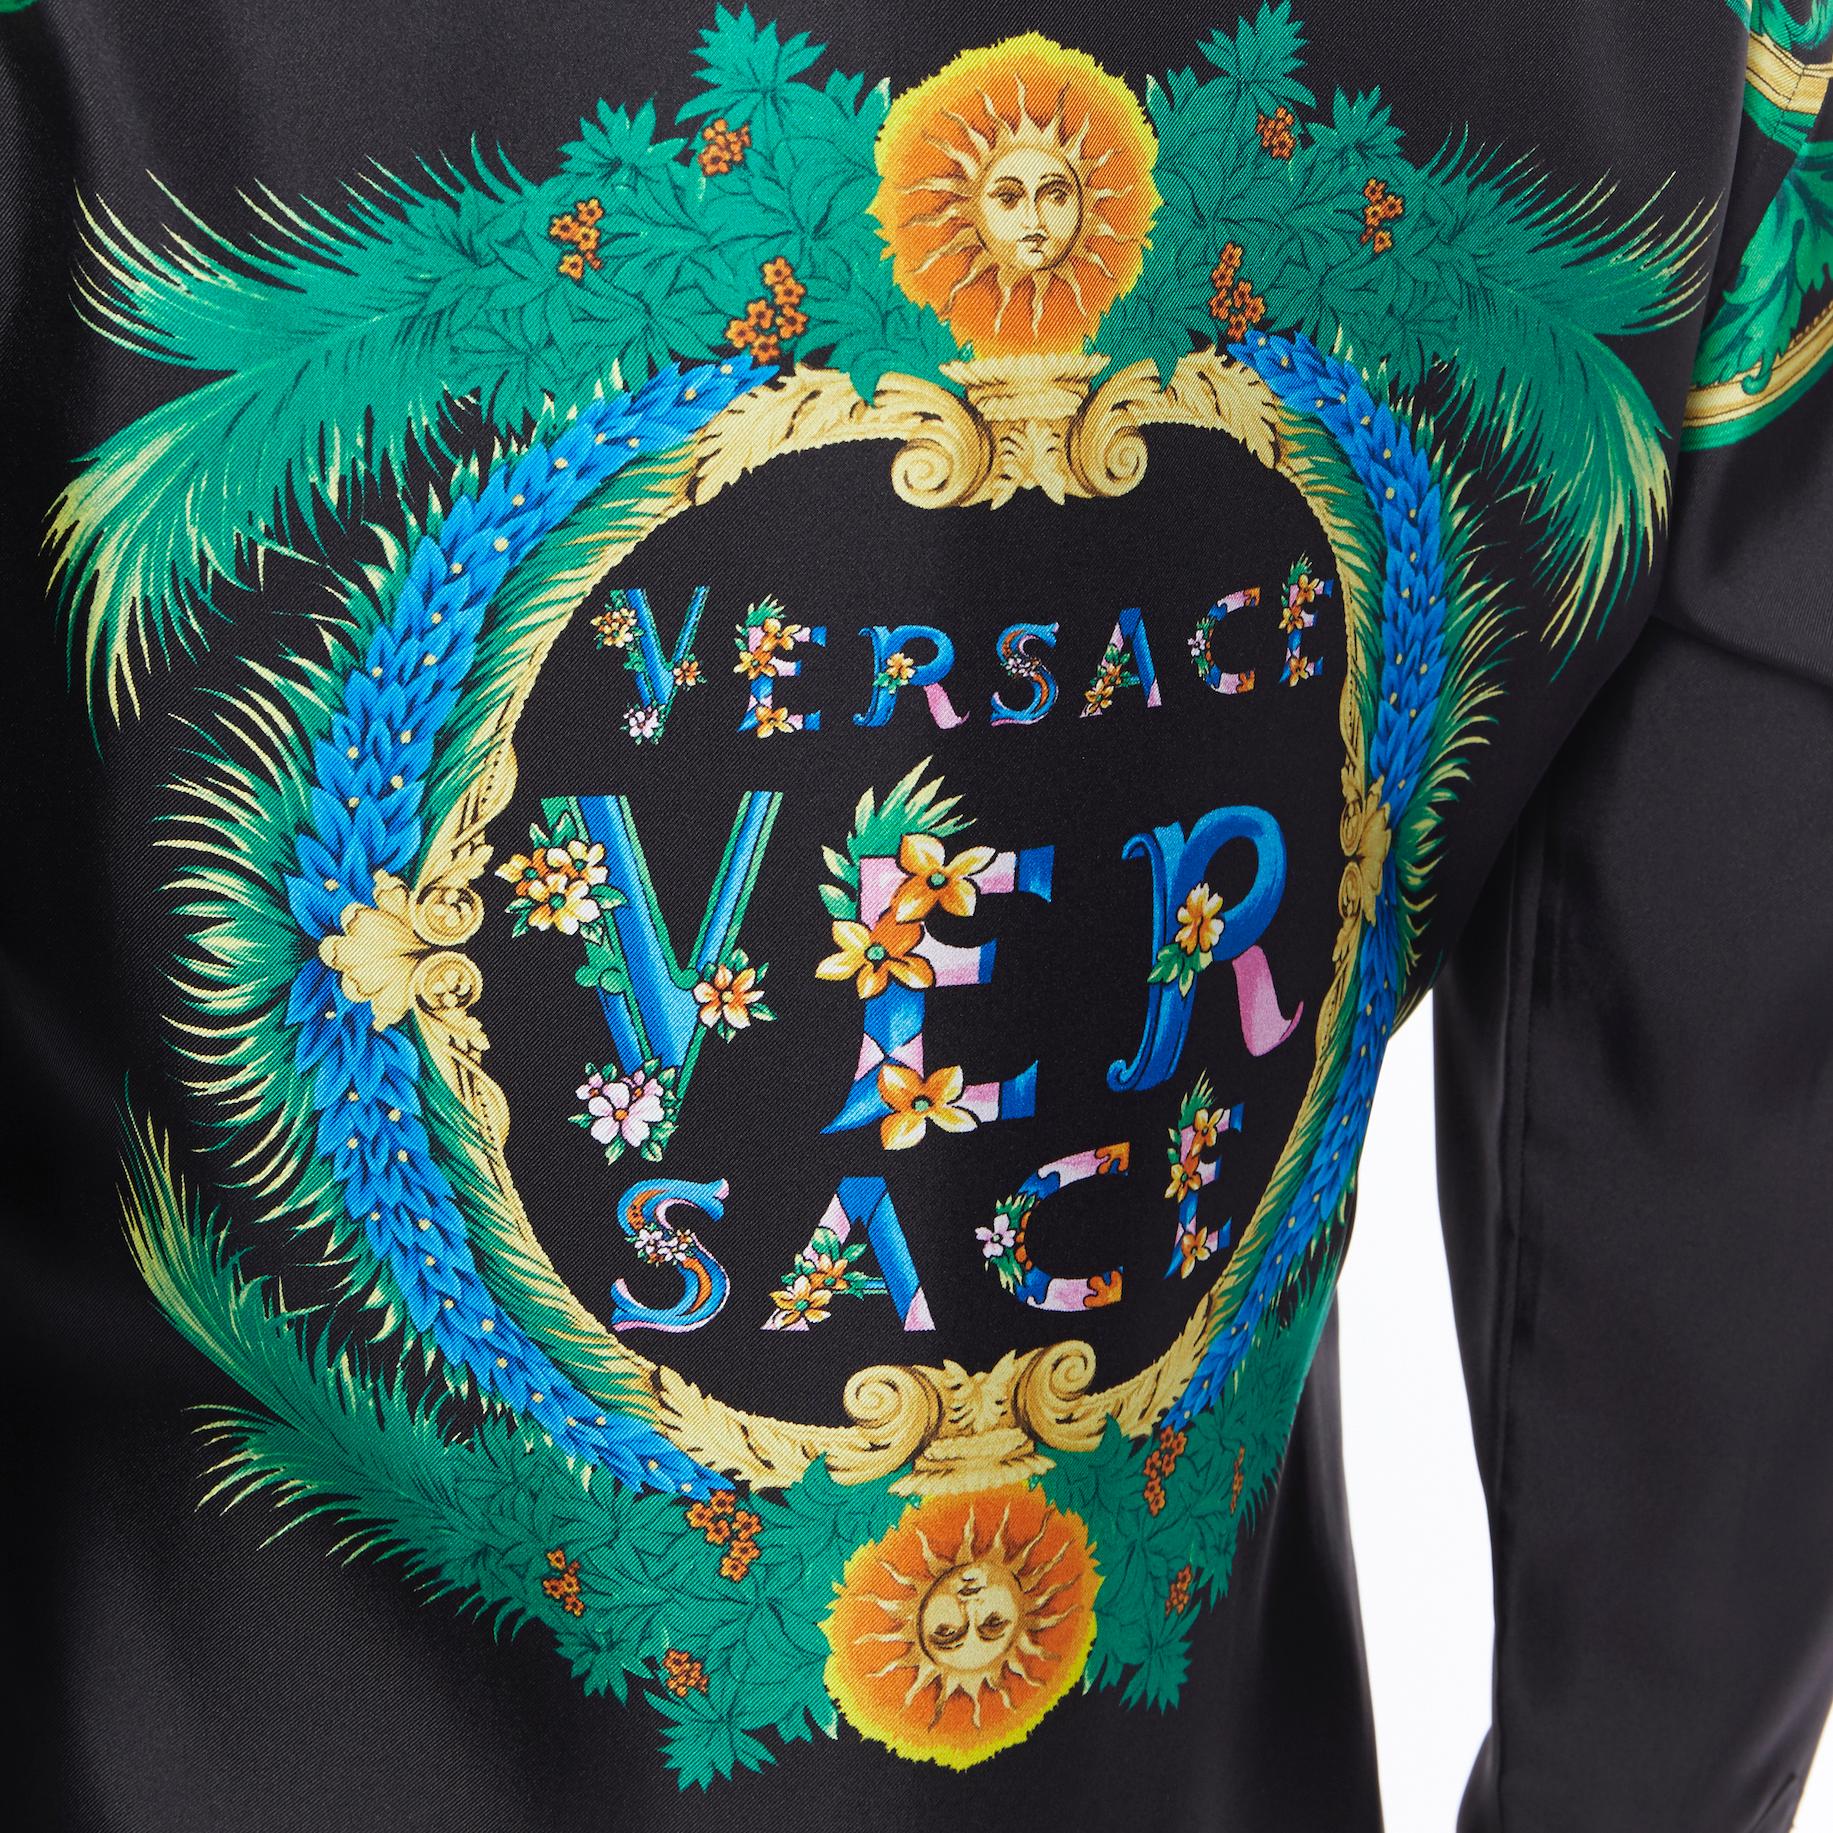 new VERSACE 2018 100% silk black Miami logo print green baroque shirt EU39 M
Brand: Versace
Designer: Donatella Versace
Model Name / Style: Silk shirt
Material: Silk
Color: Black; multicolor floral print
Pattern: Other; Miami print
Closure: